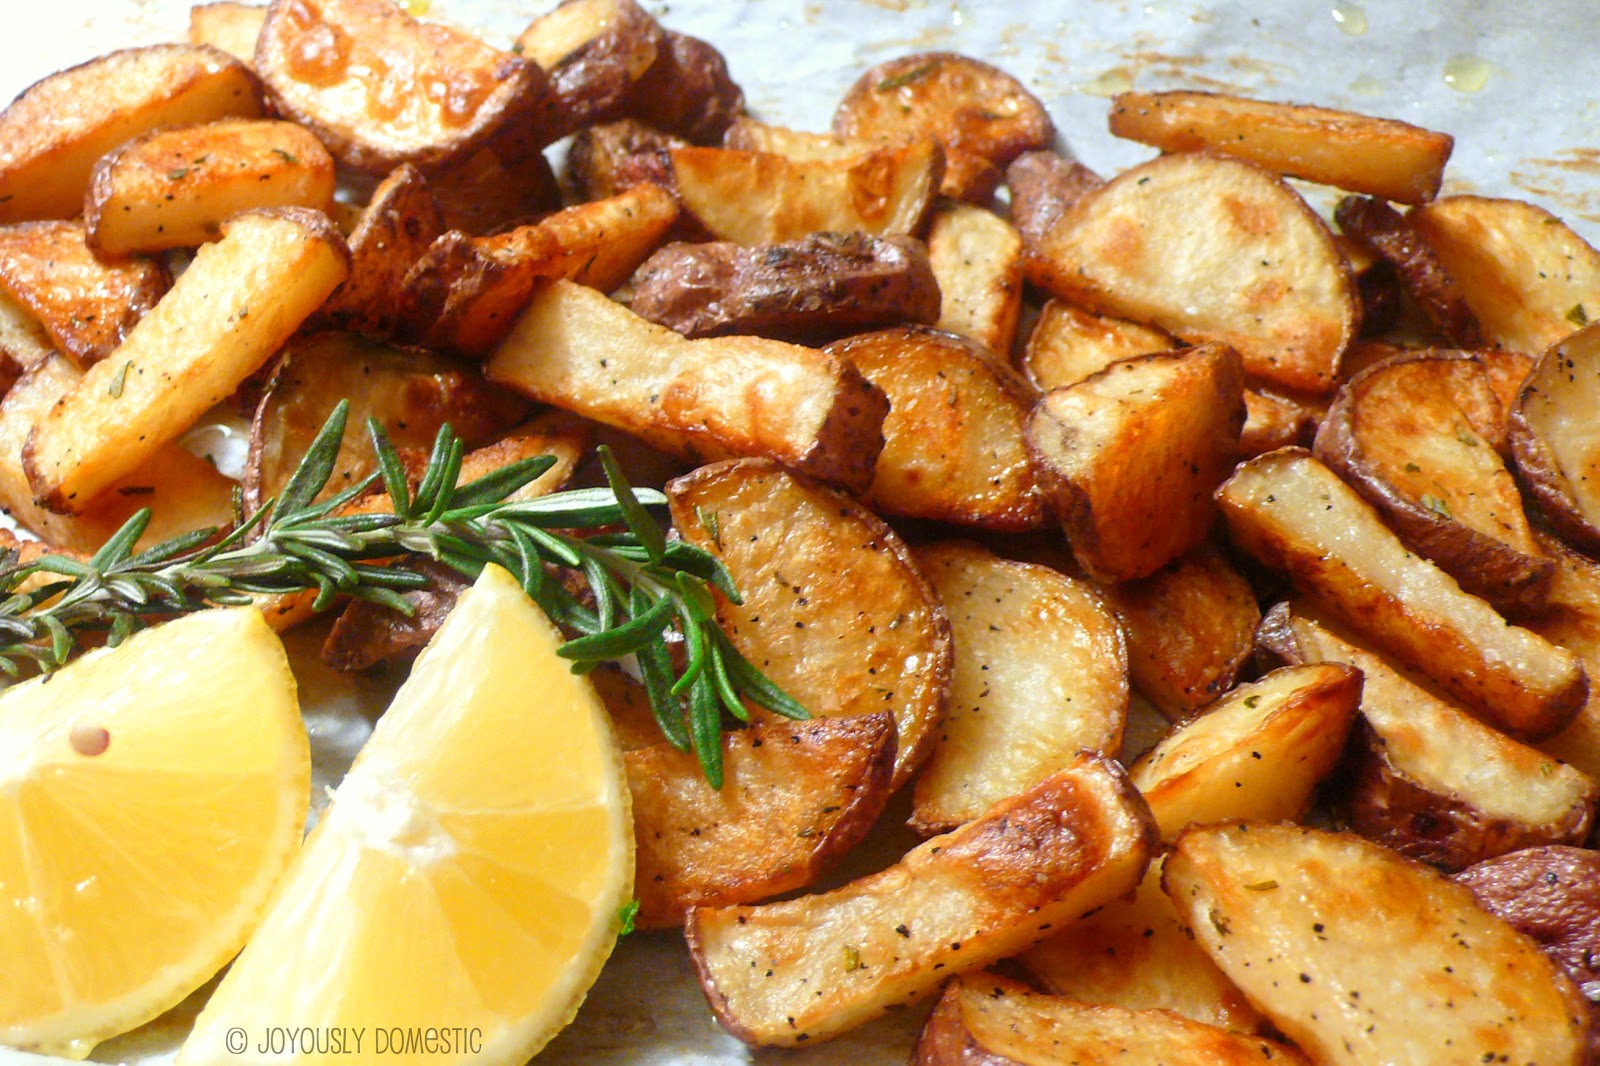 Joyously Domestic: Roasted Red Potatoes with Lemon Garlic Aioli